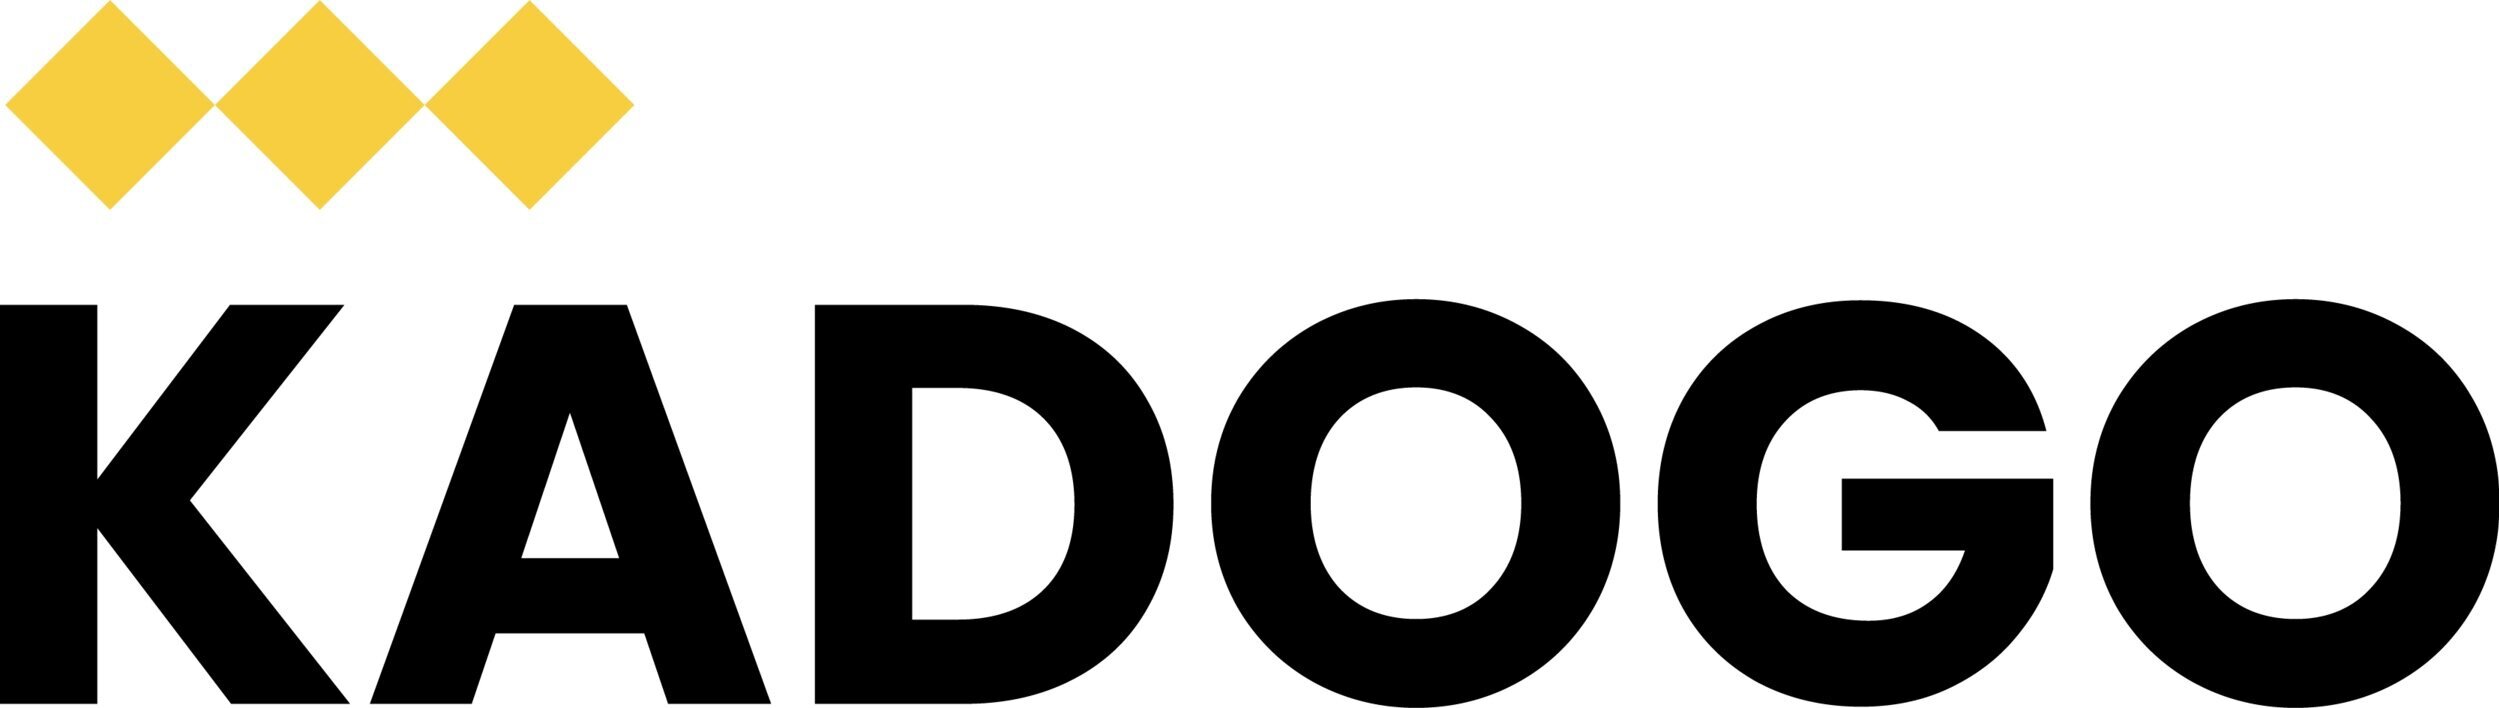 Kadogo-logo.jpg